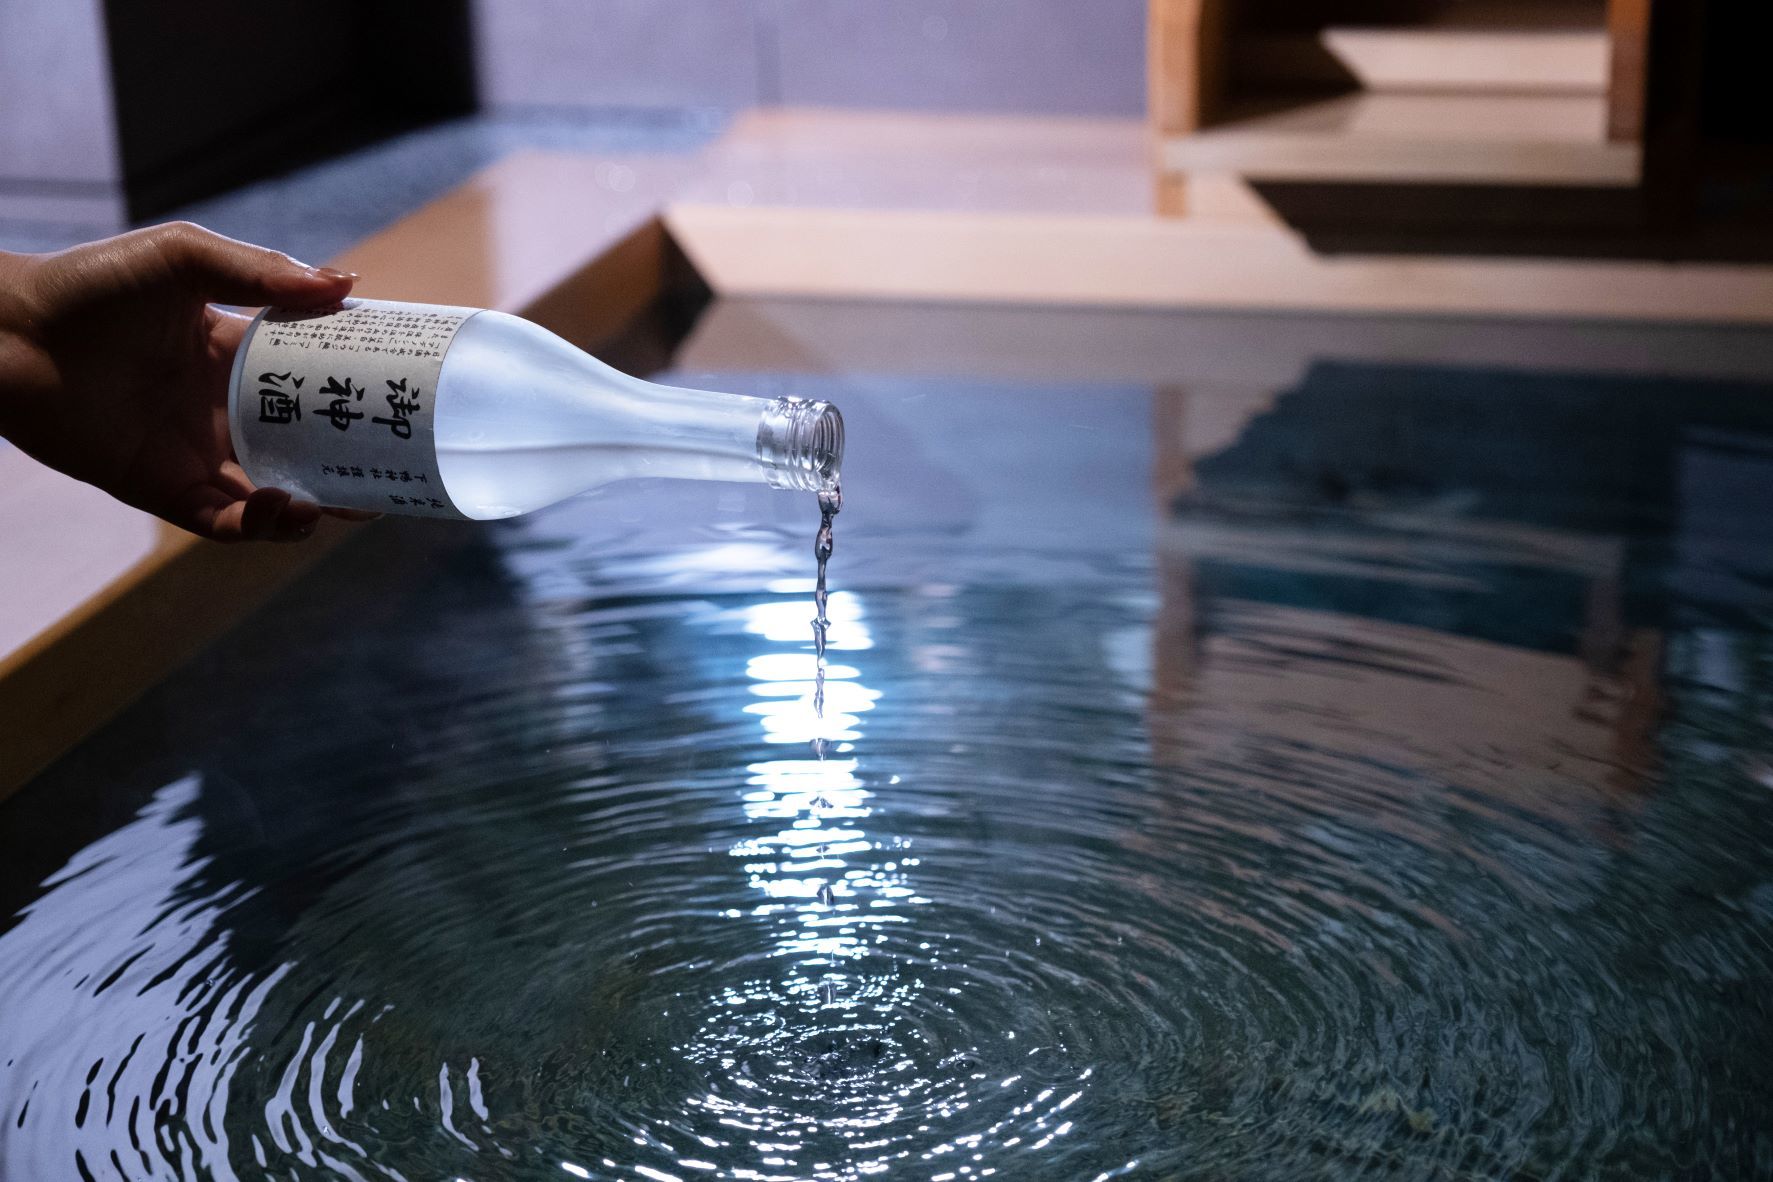 THE JUNEI HOTEL 京都
「JUNEI Memory～京の美を味わう。身も心も癒される、
御神酒風呂と冬の京スイーツ」を11月より開始